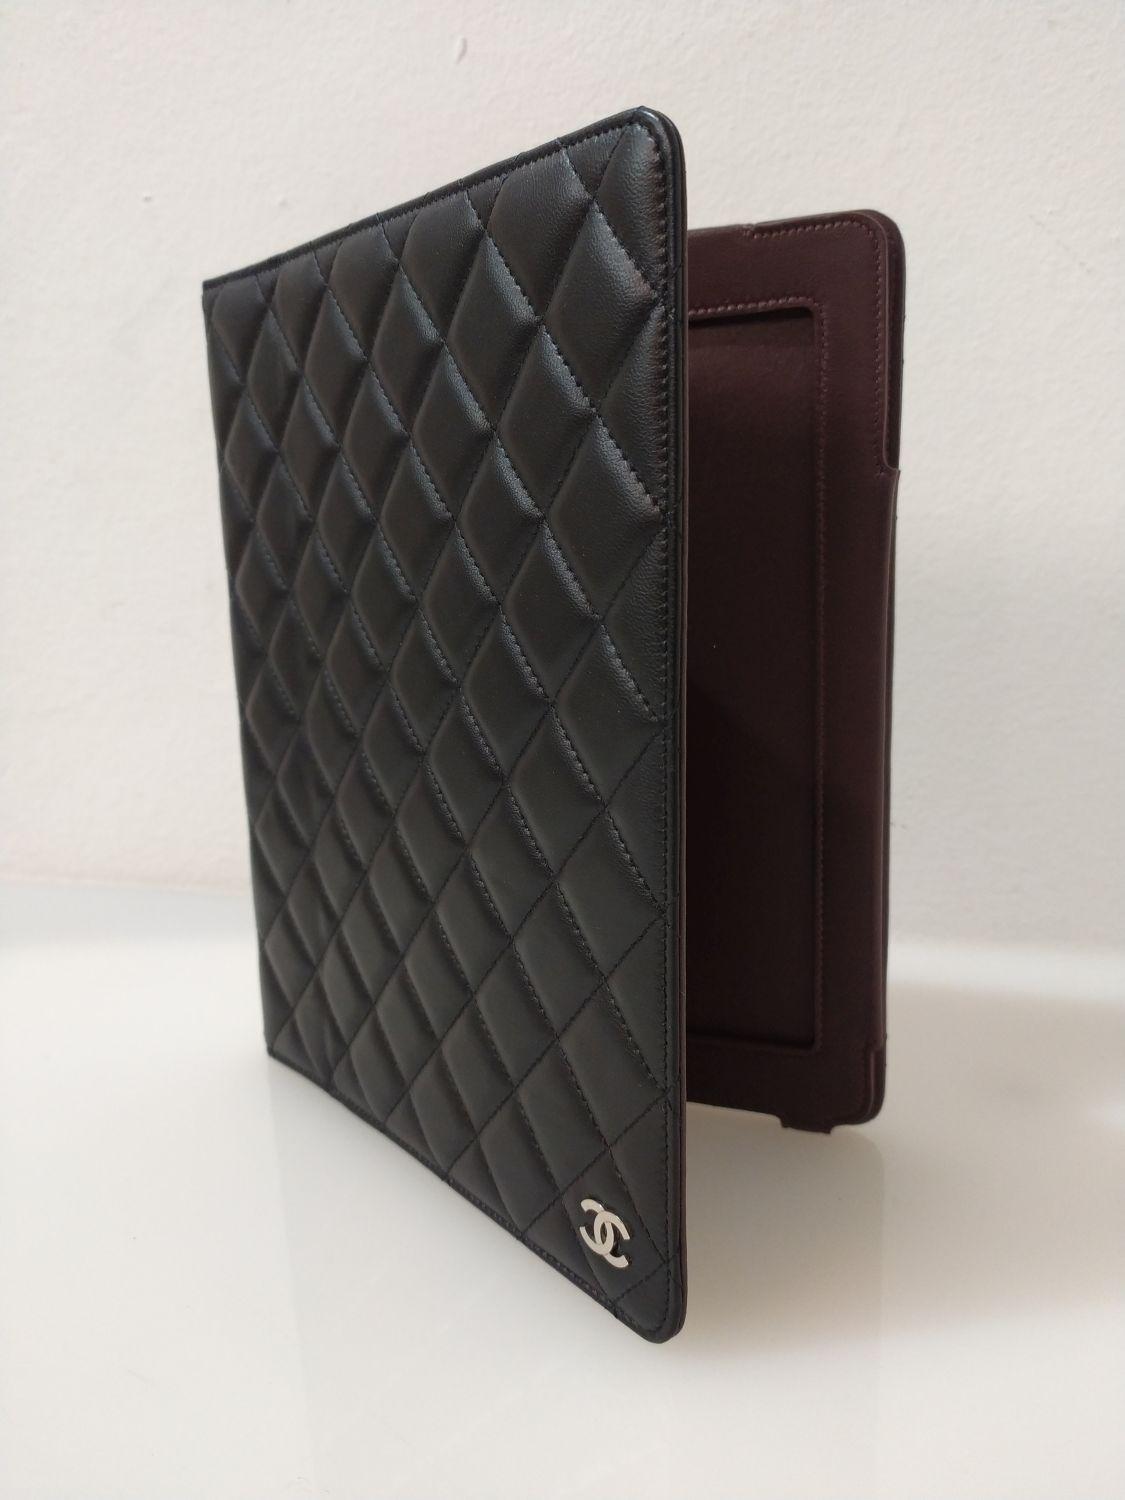 Women's Chanel Black Leather Ipad Case